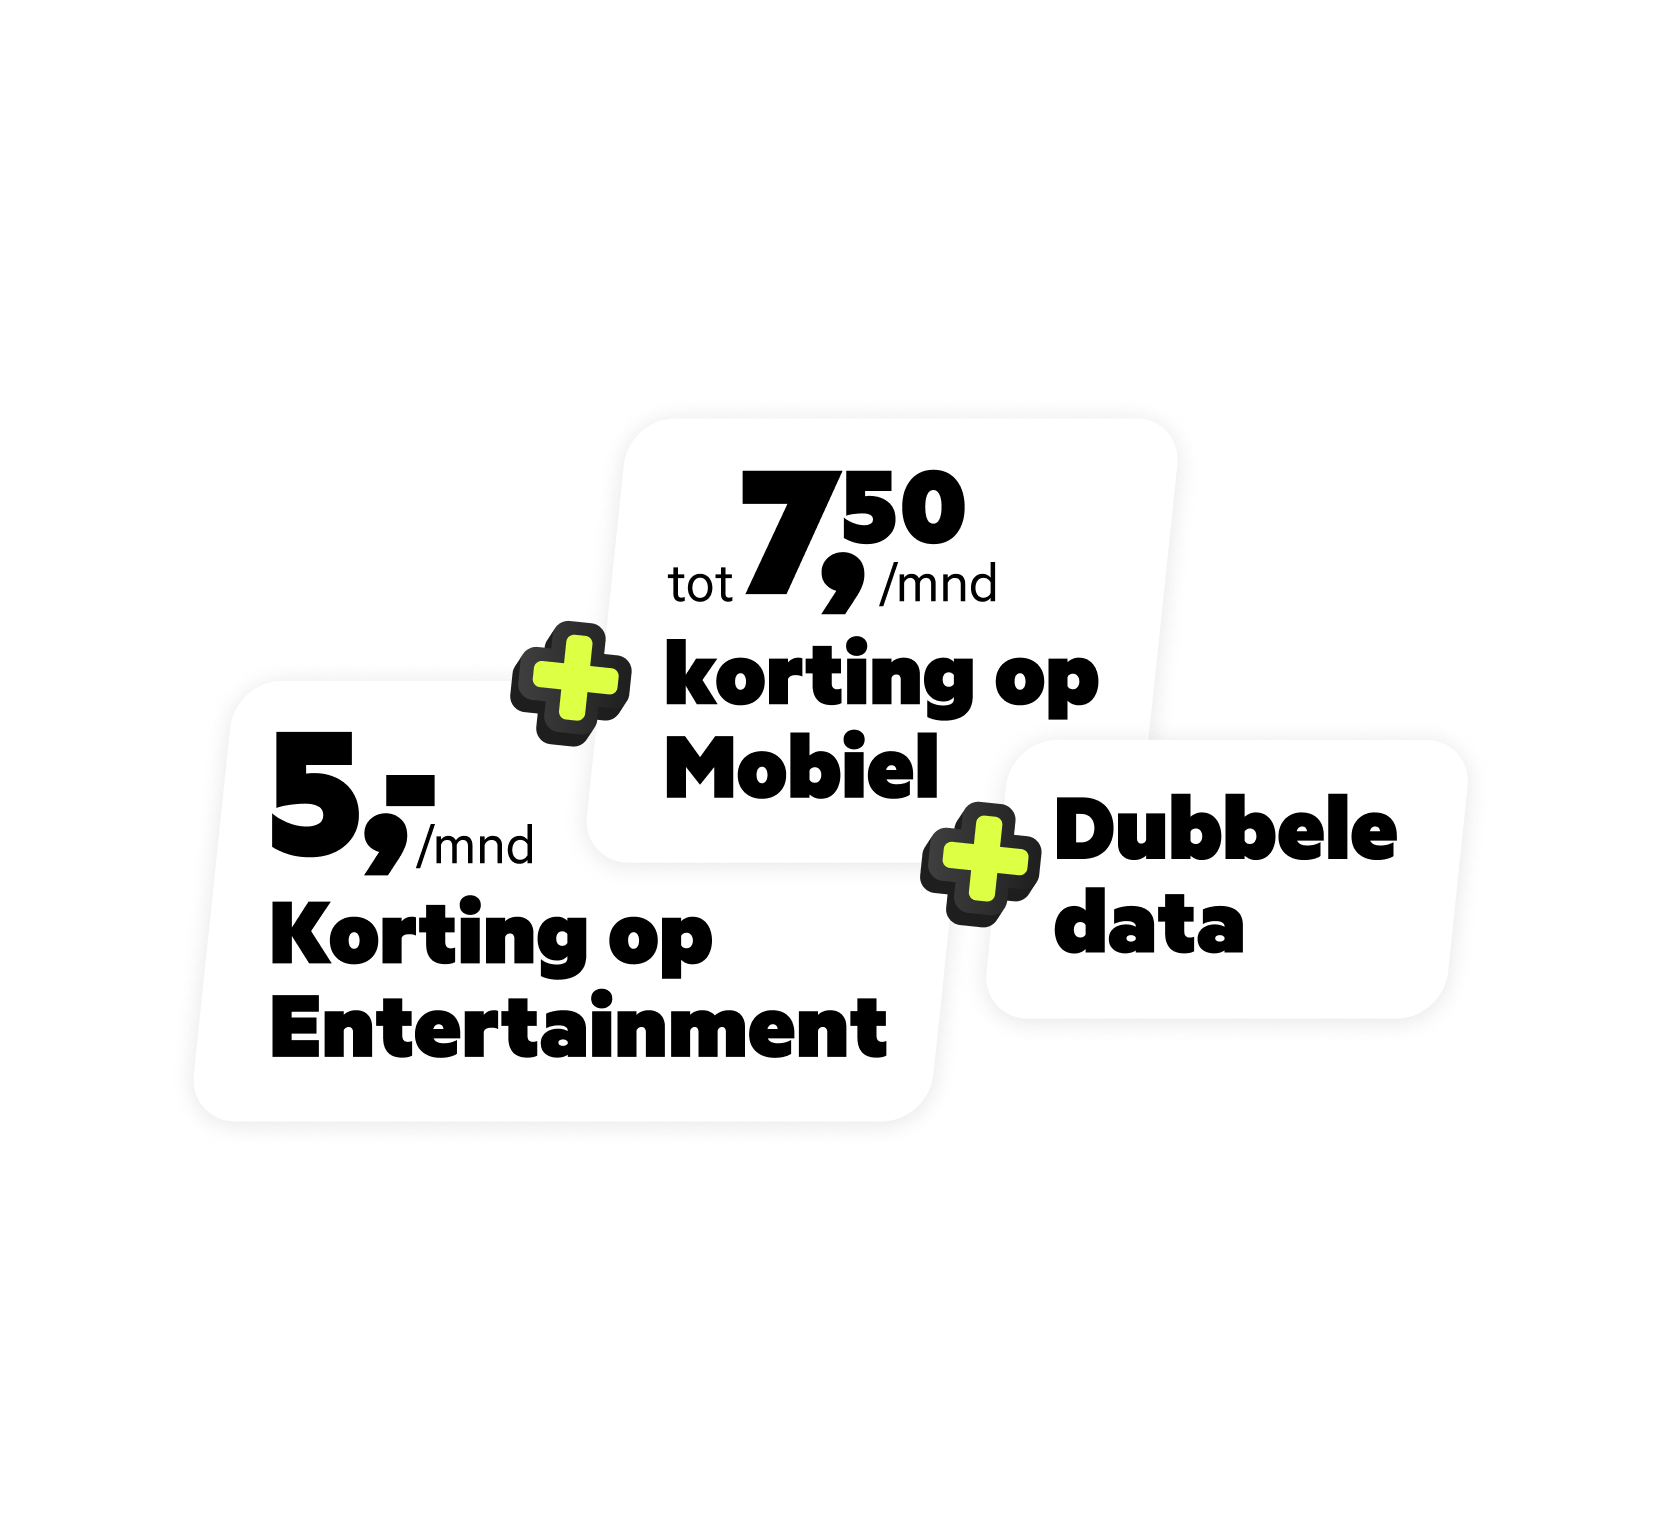 tot 7,50 euro korting op mobiel + 5 euro per maand korting op entertainment + dubbele data